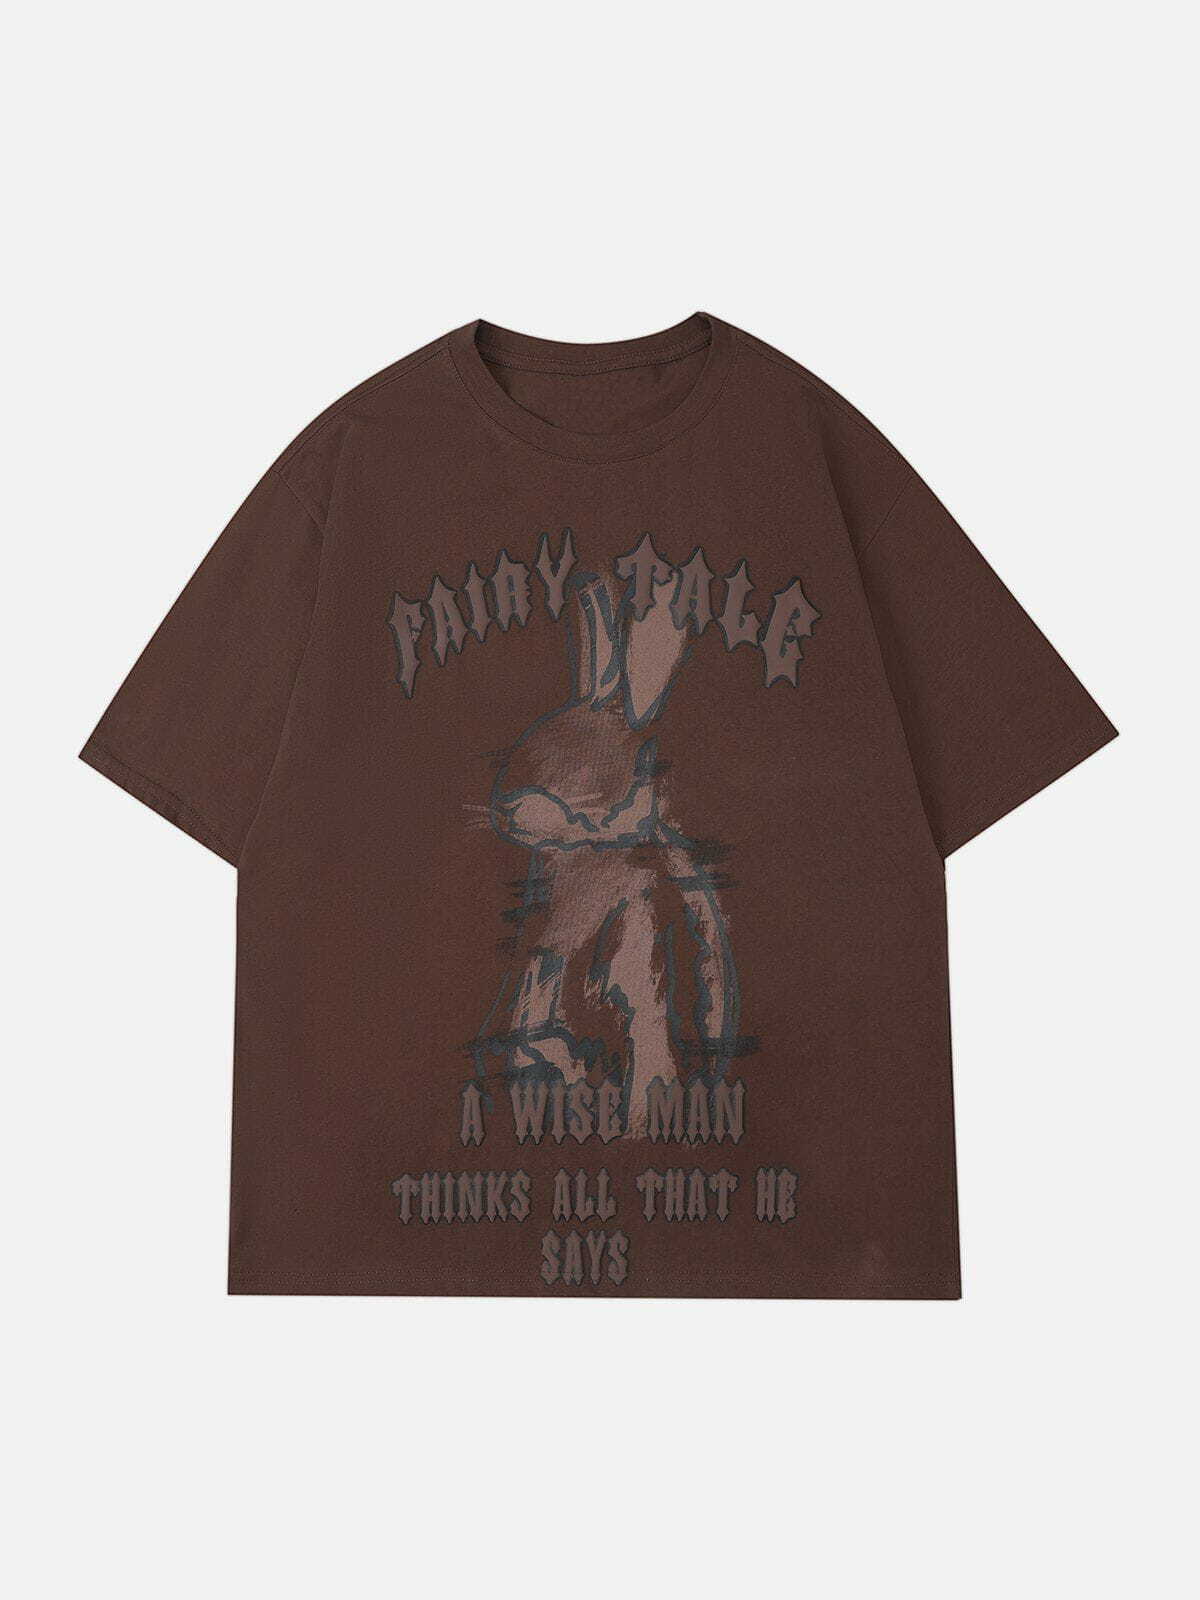 youthful rabbit tee edgy  retro print shirt 3151